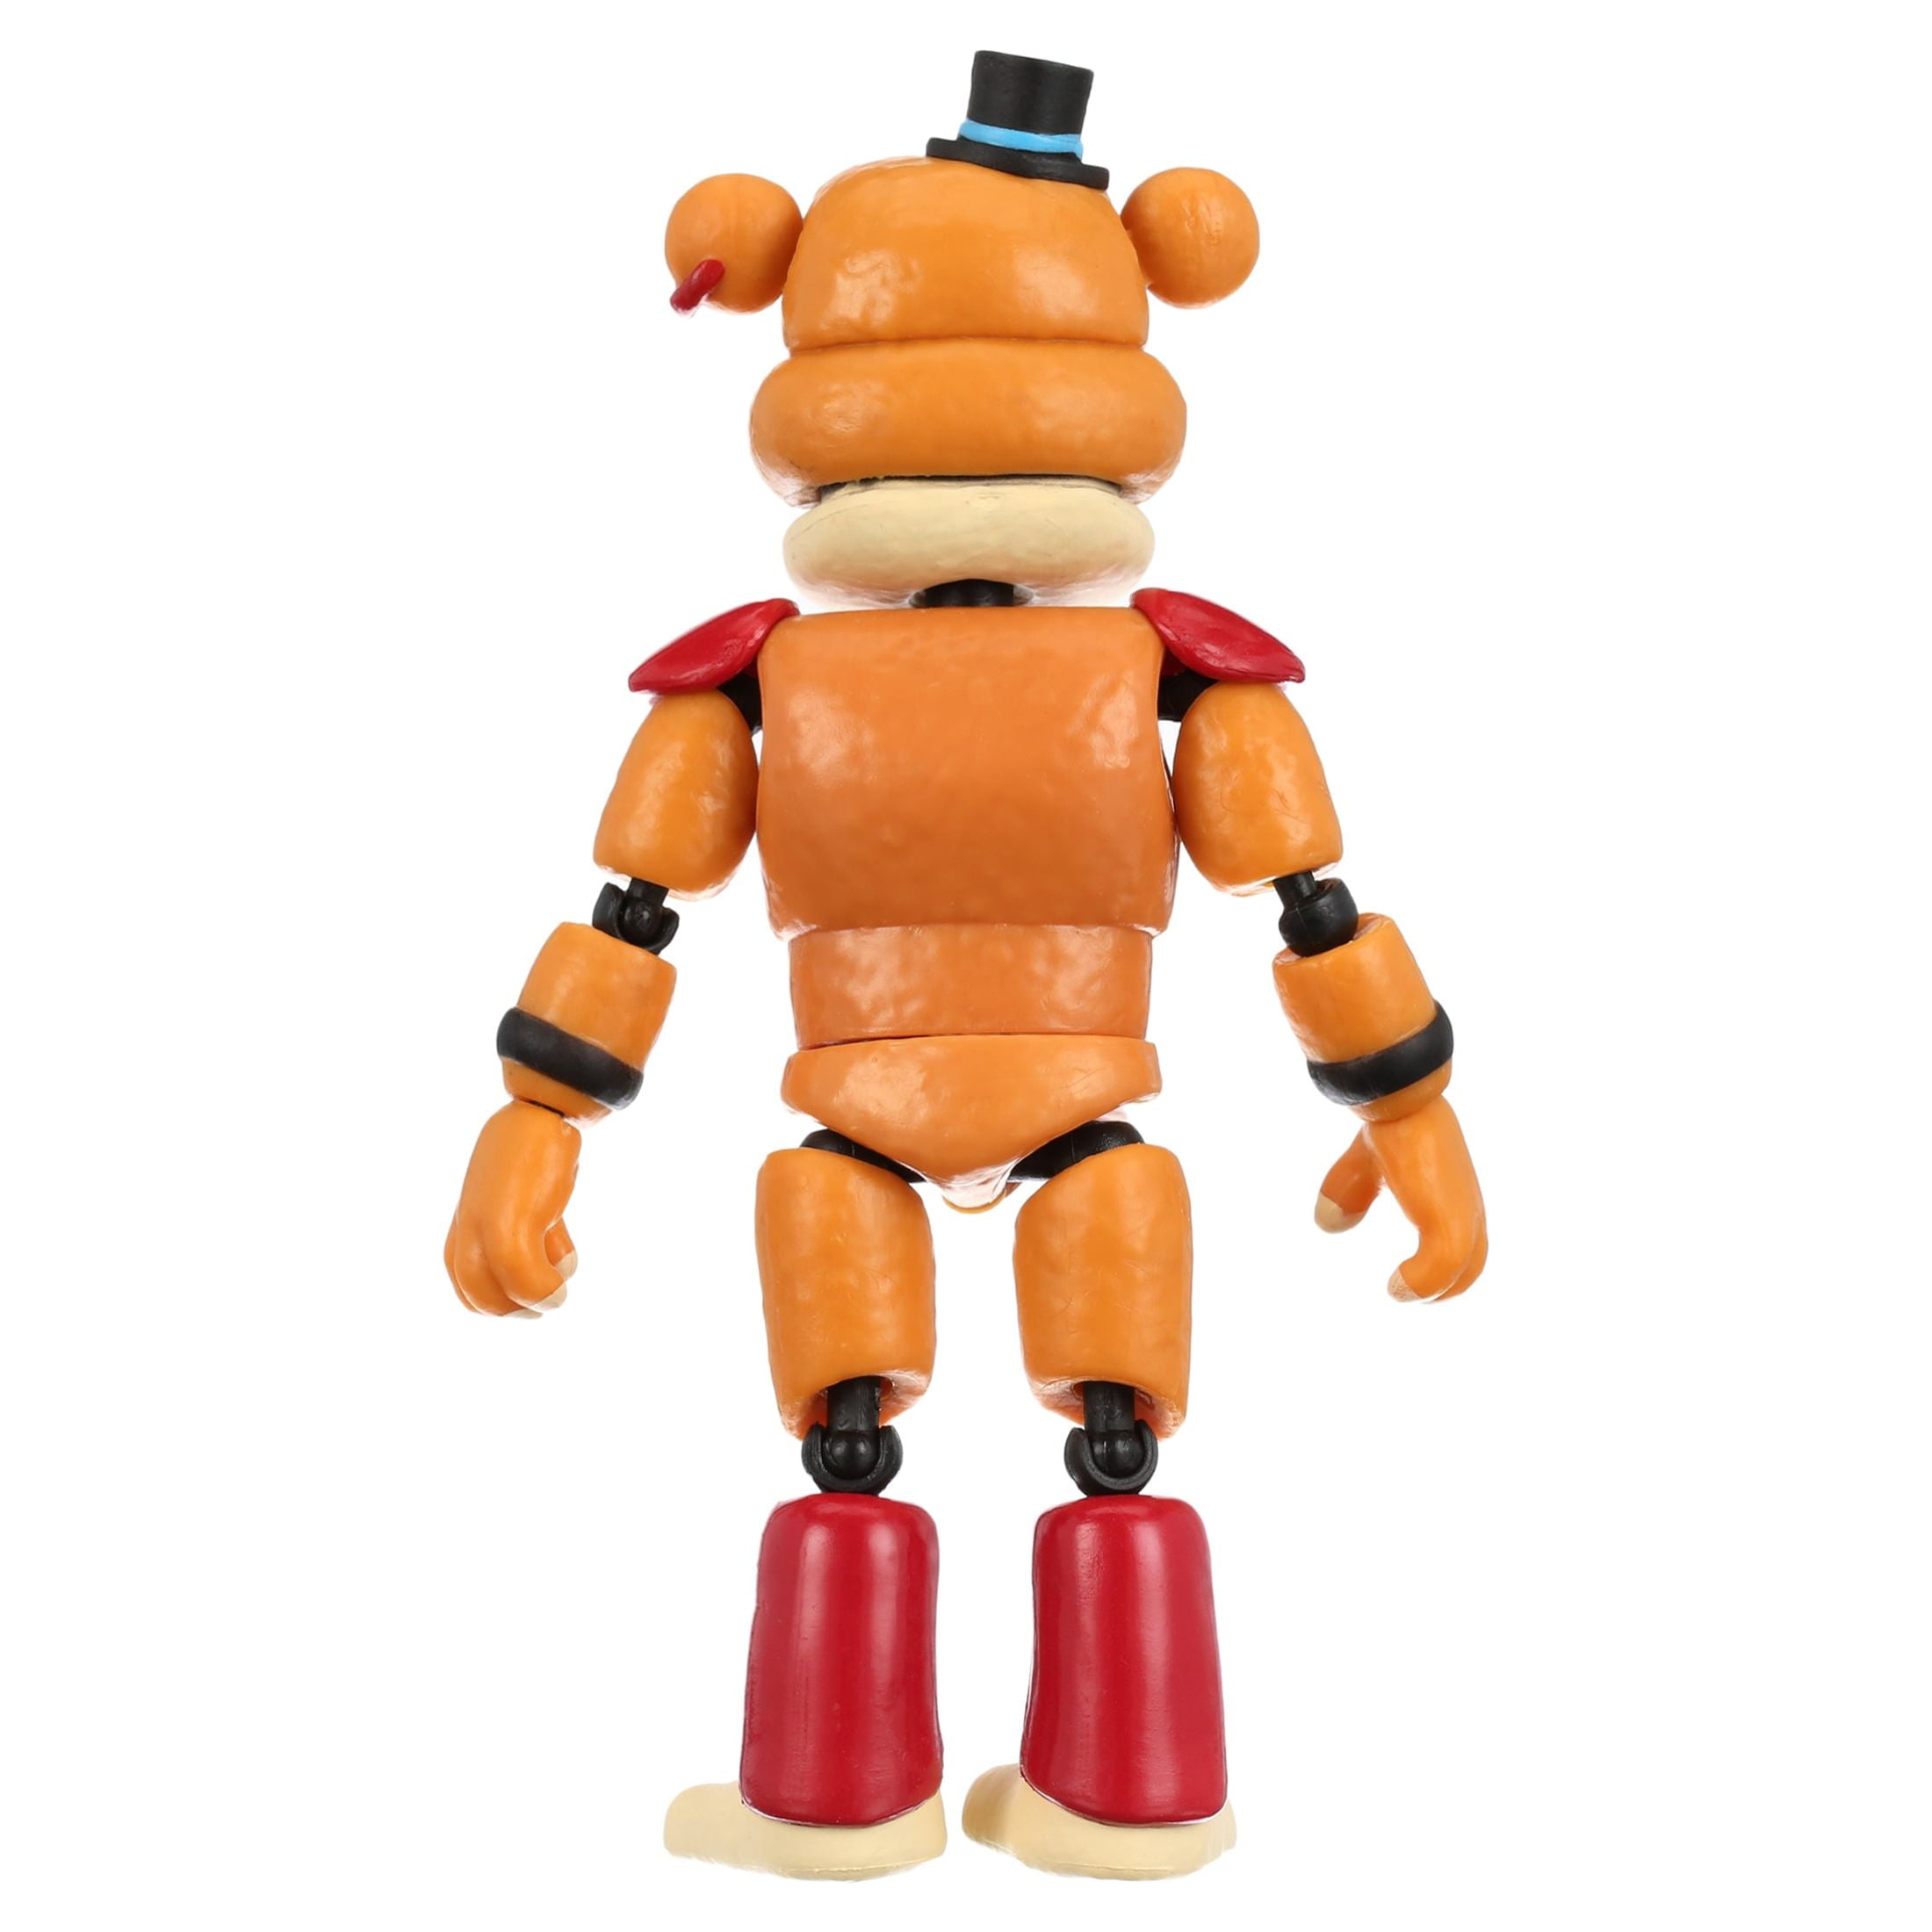 Five Nights at Freddy's: Security Breach Glamrock Freddy Snap Mini-Figure